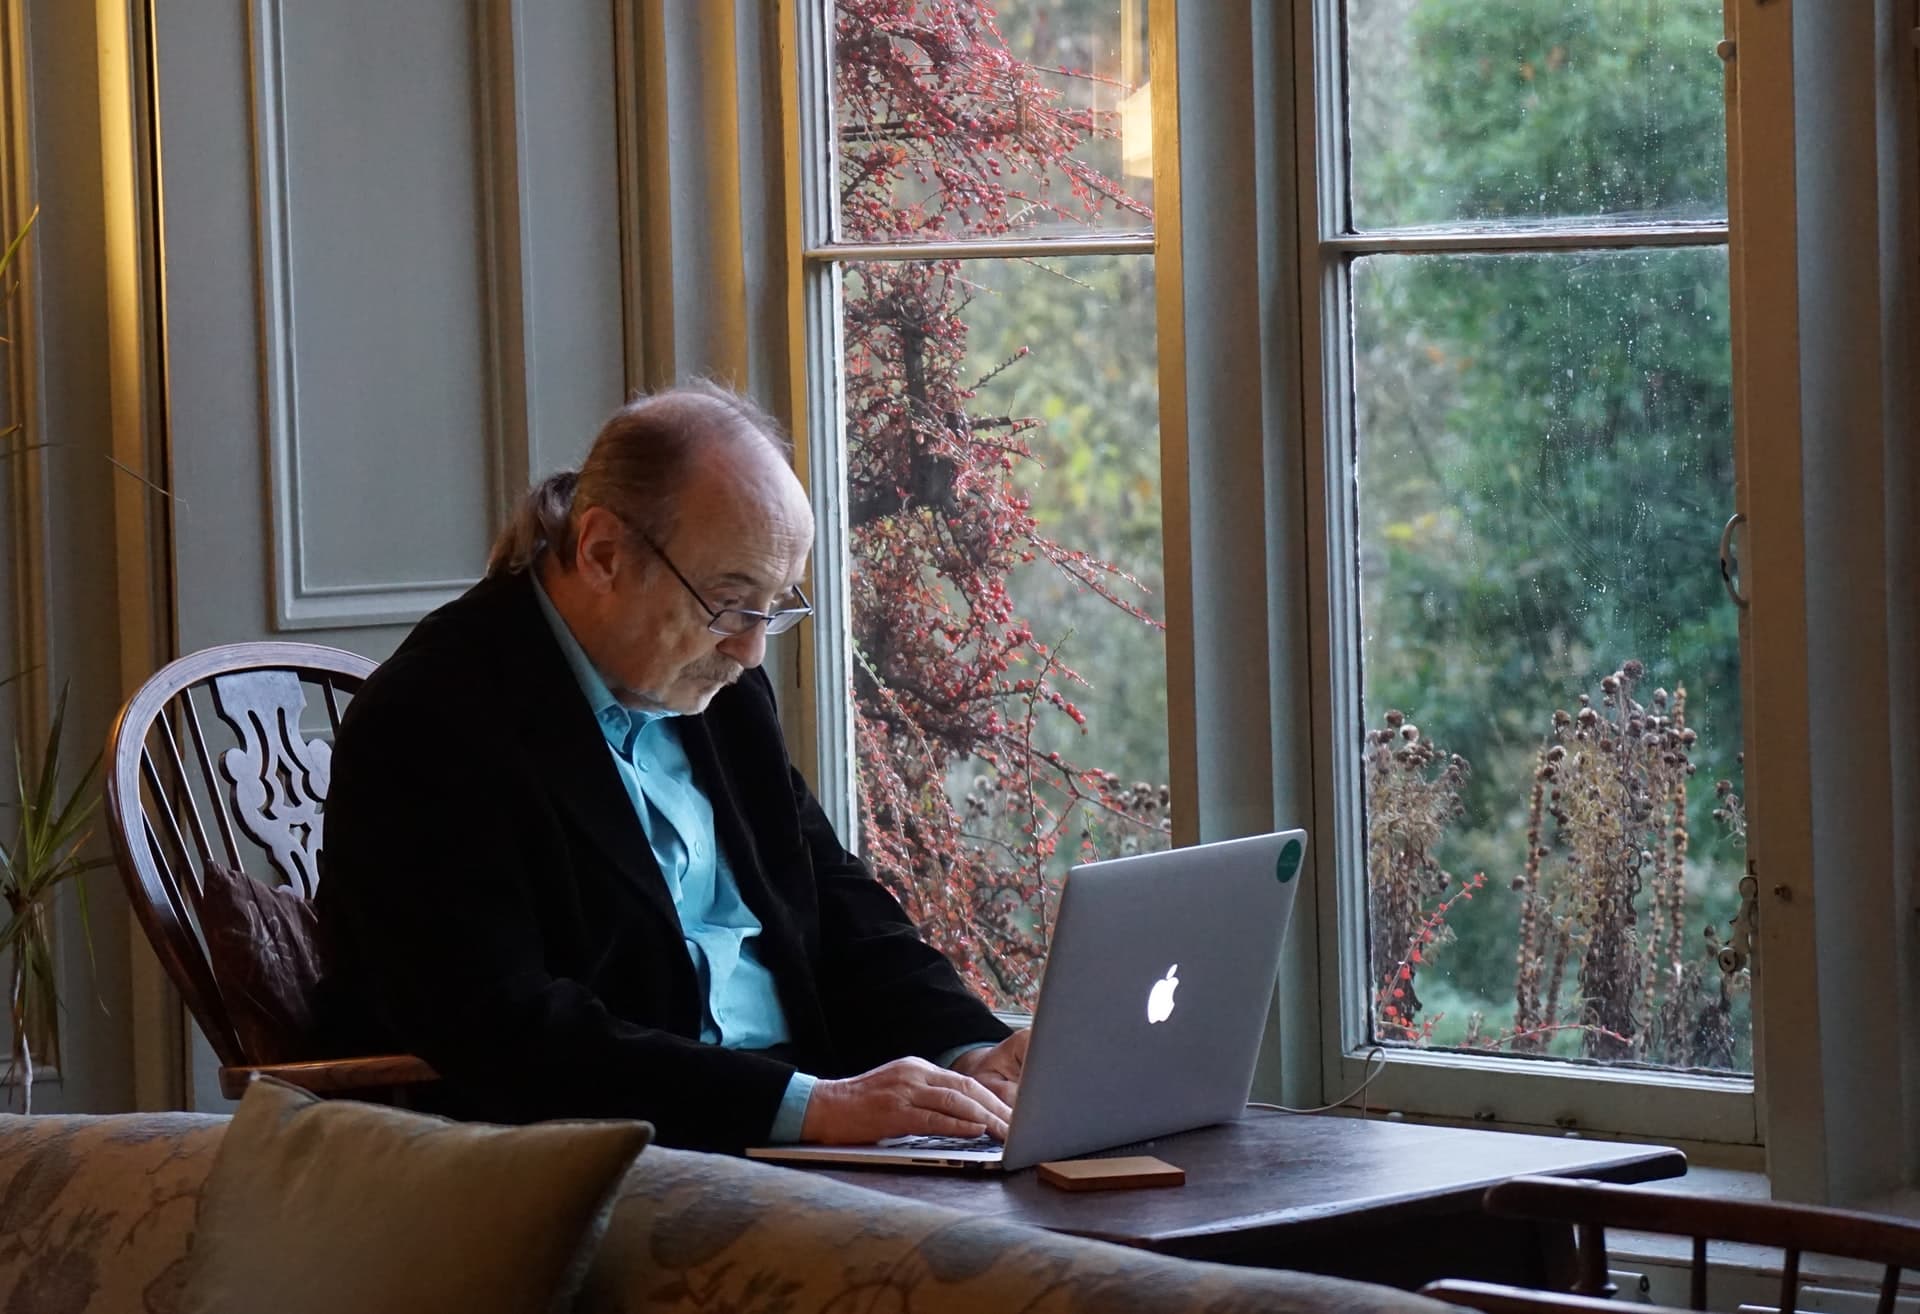 An elderly man using a laptop on a desk beside a window.